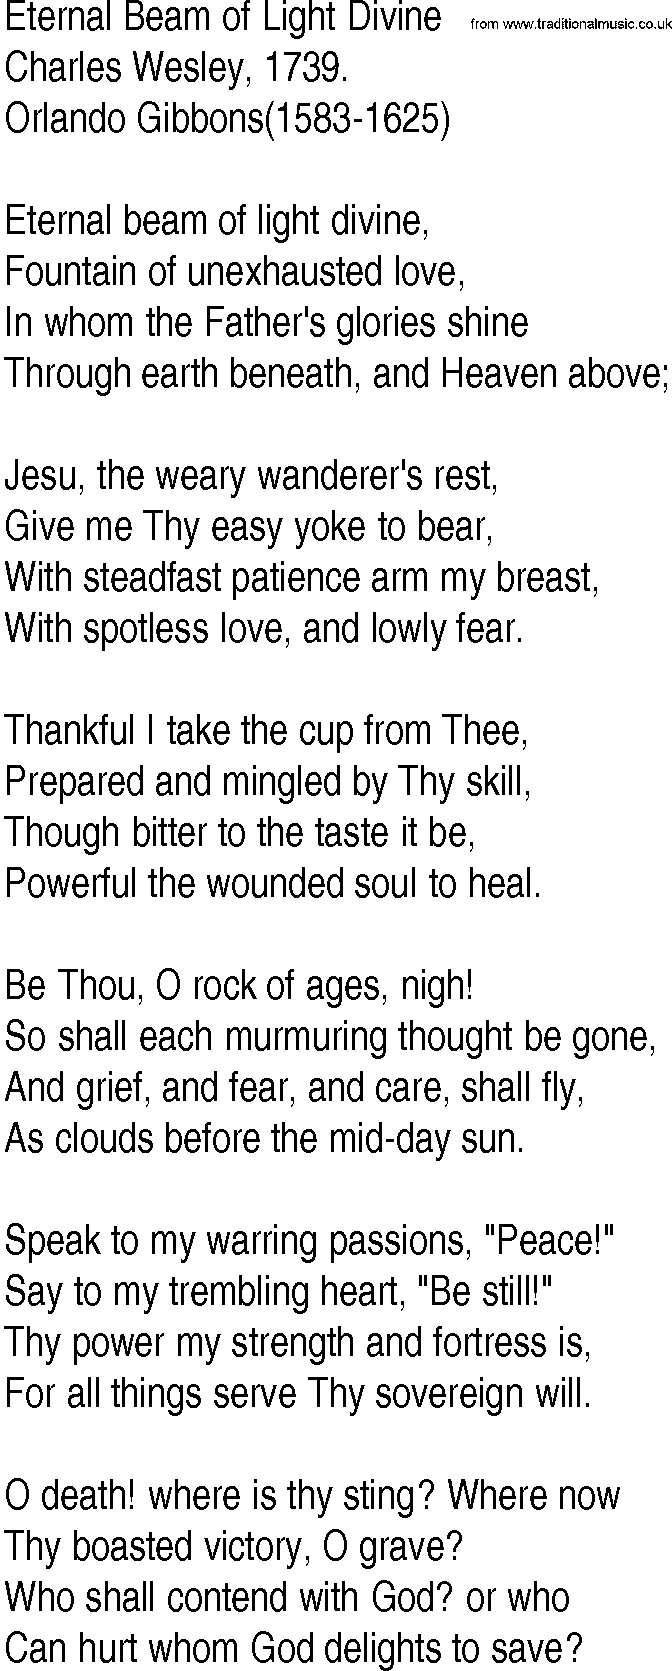 Hymn and Gospel Song: Eternal Beam of Light Divine by Charles Wesley lyrics